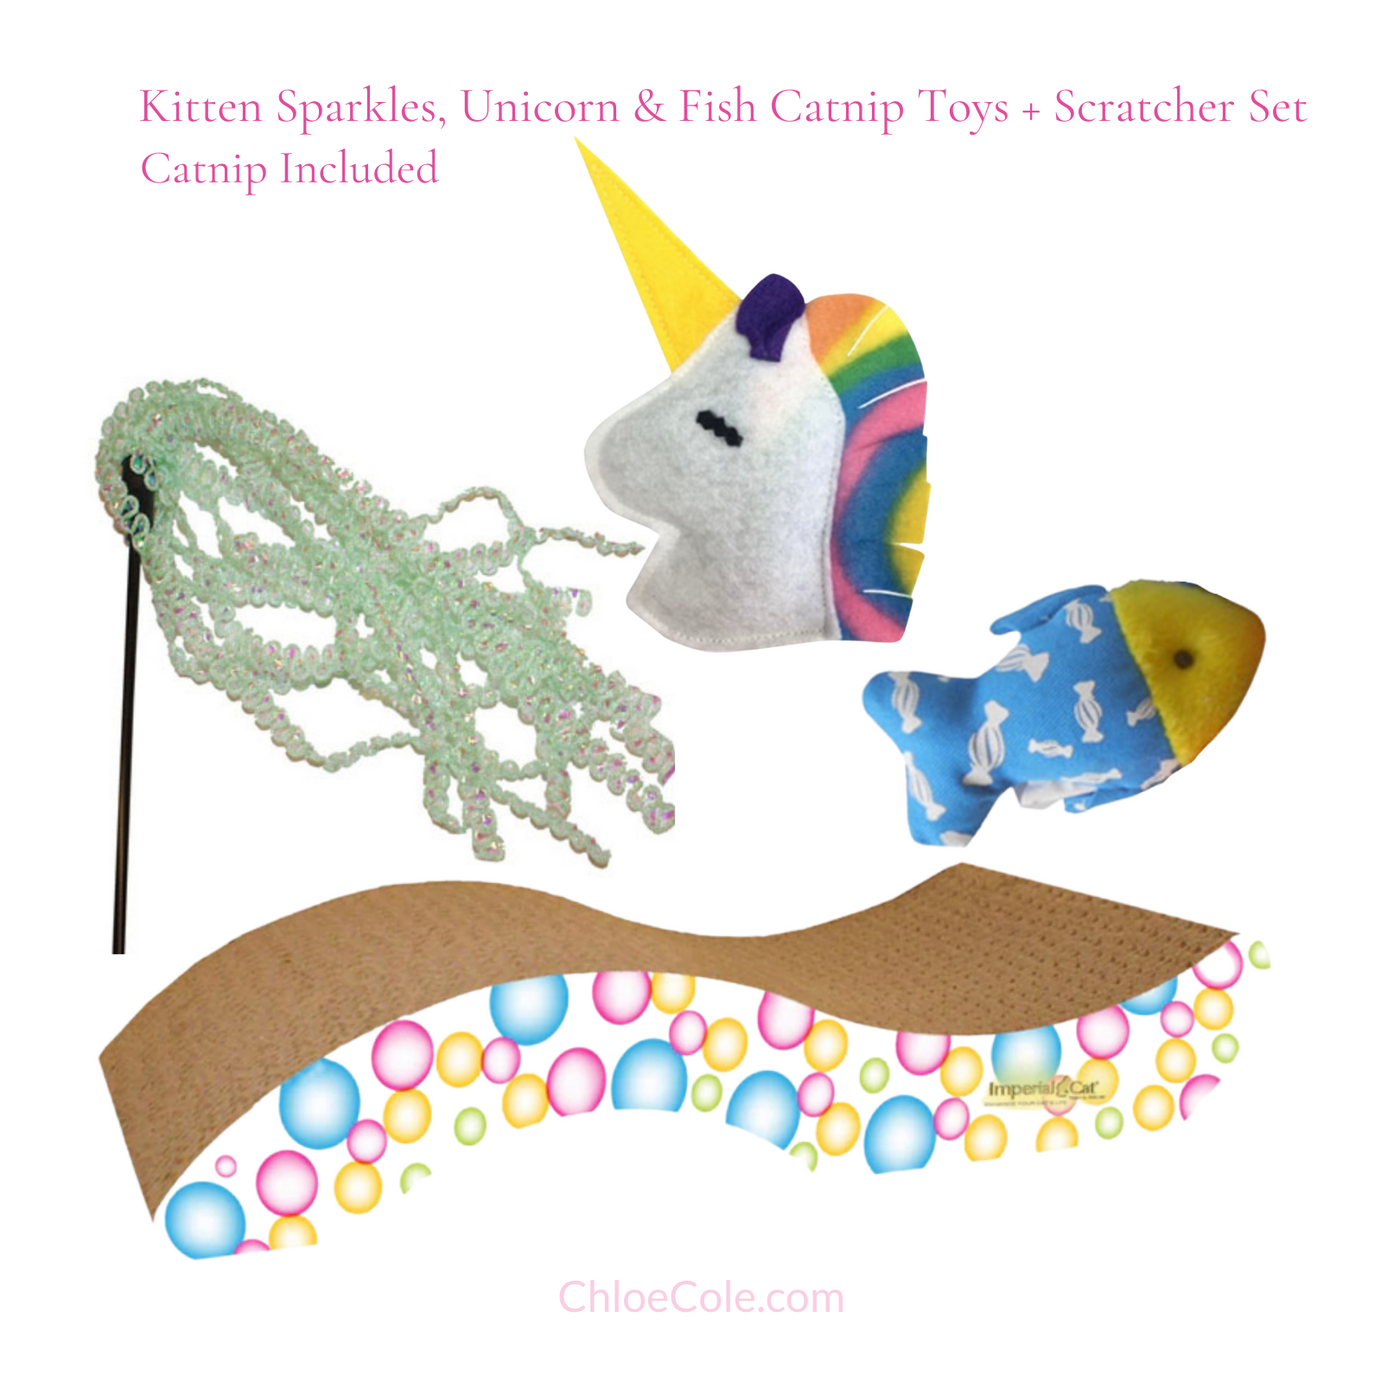 Kitten Sparkles, Unicorn & Fish Catnip Toys + Scratcher Set